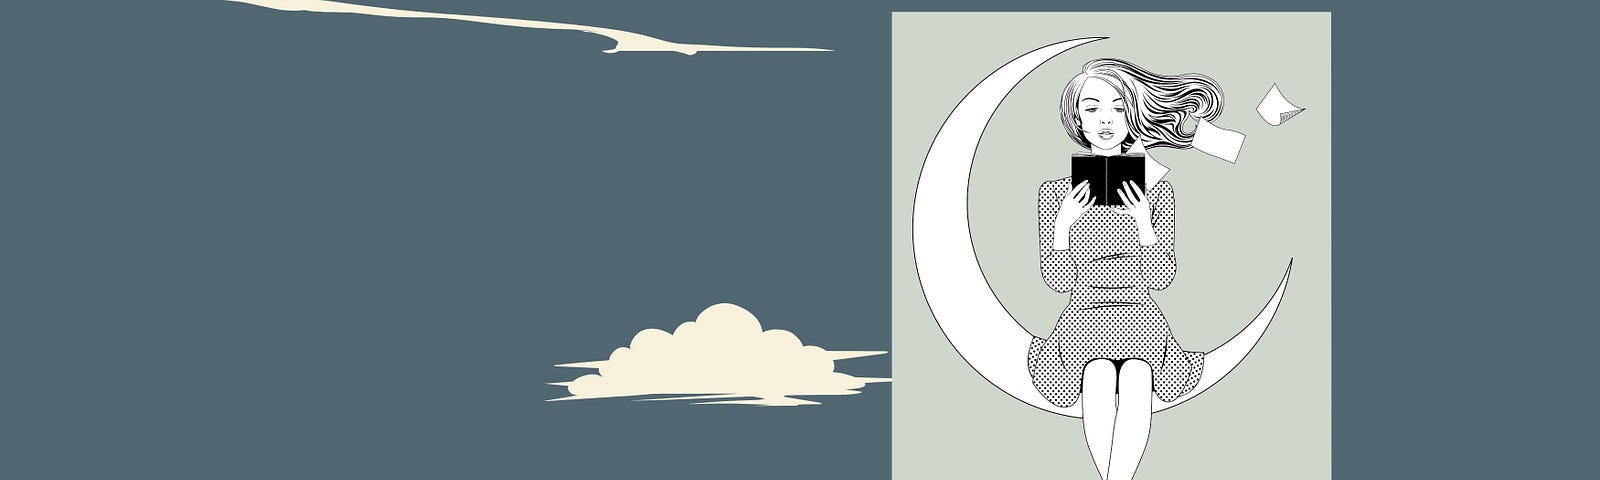 DayDreamers, inventors, Moon and Cloud Metaphors